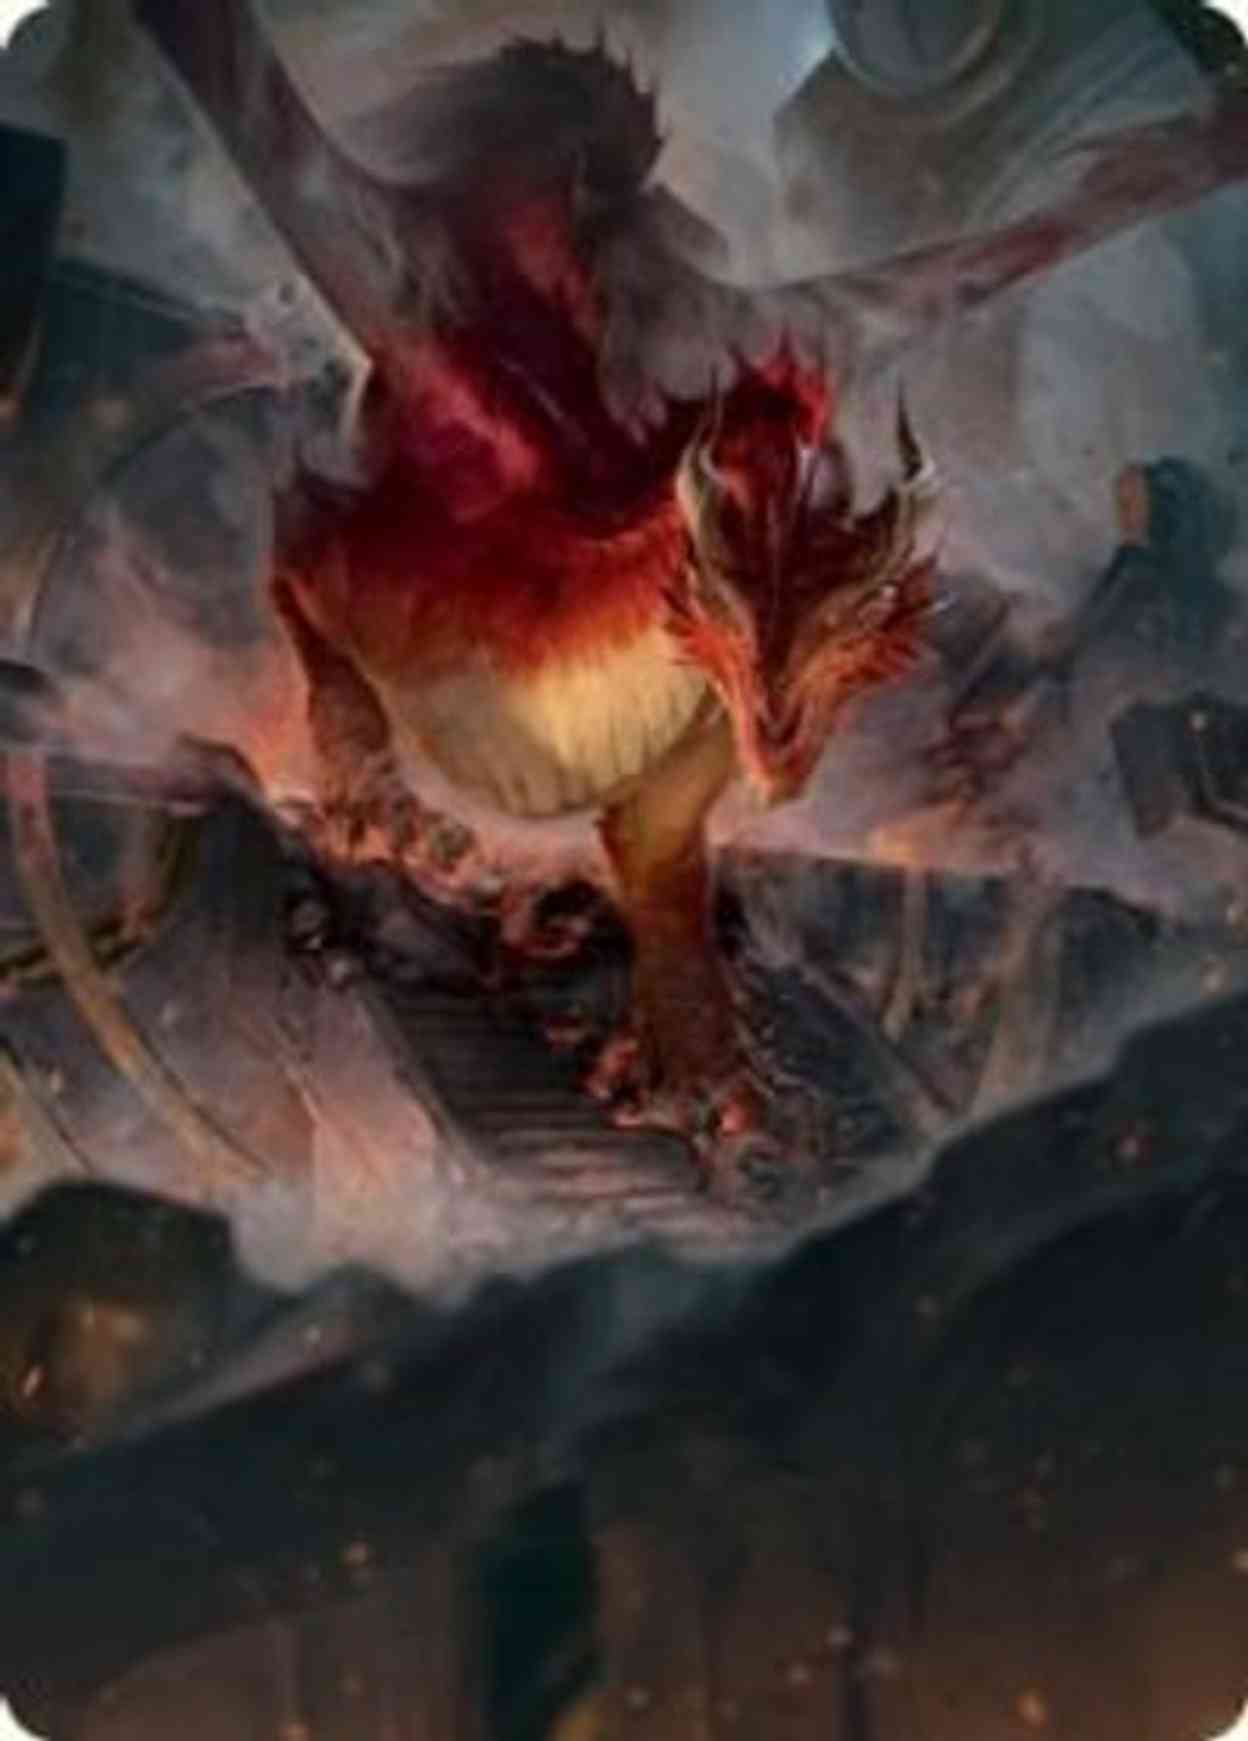 Red Dragon Fantasy Postcard for Sale by radekmilicka